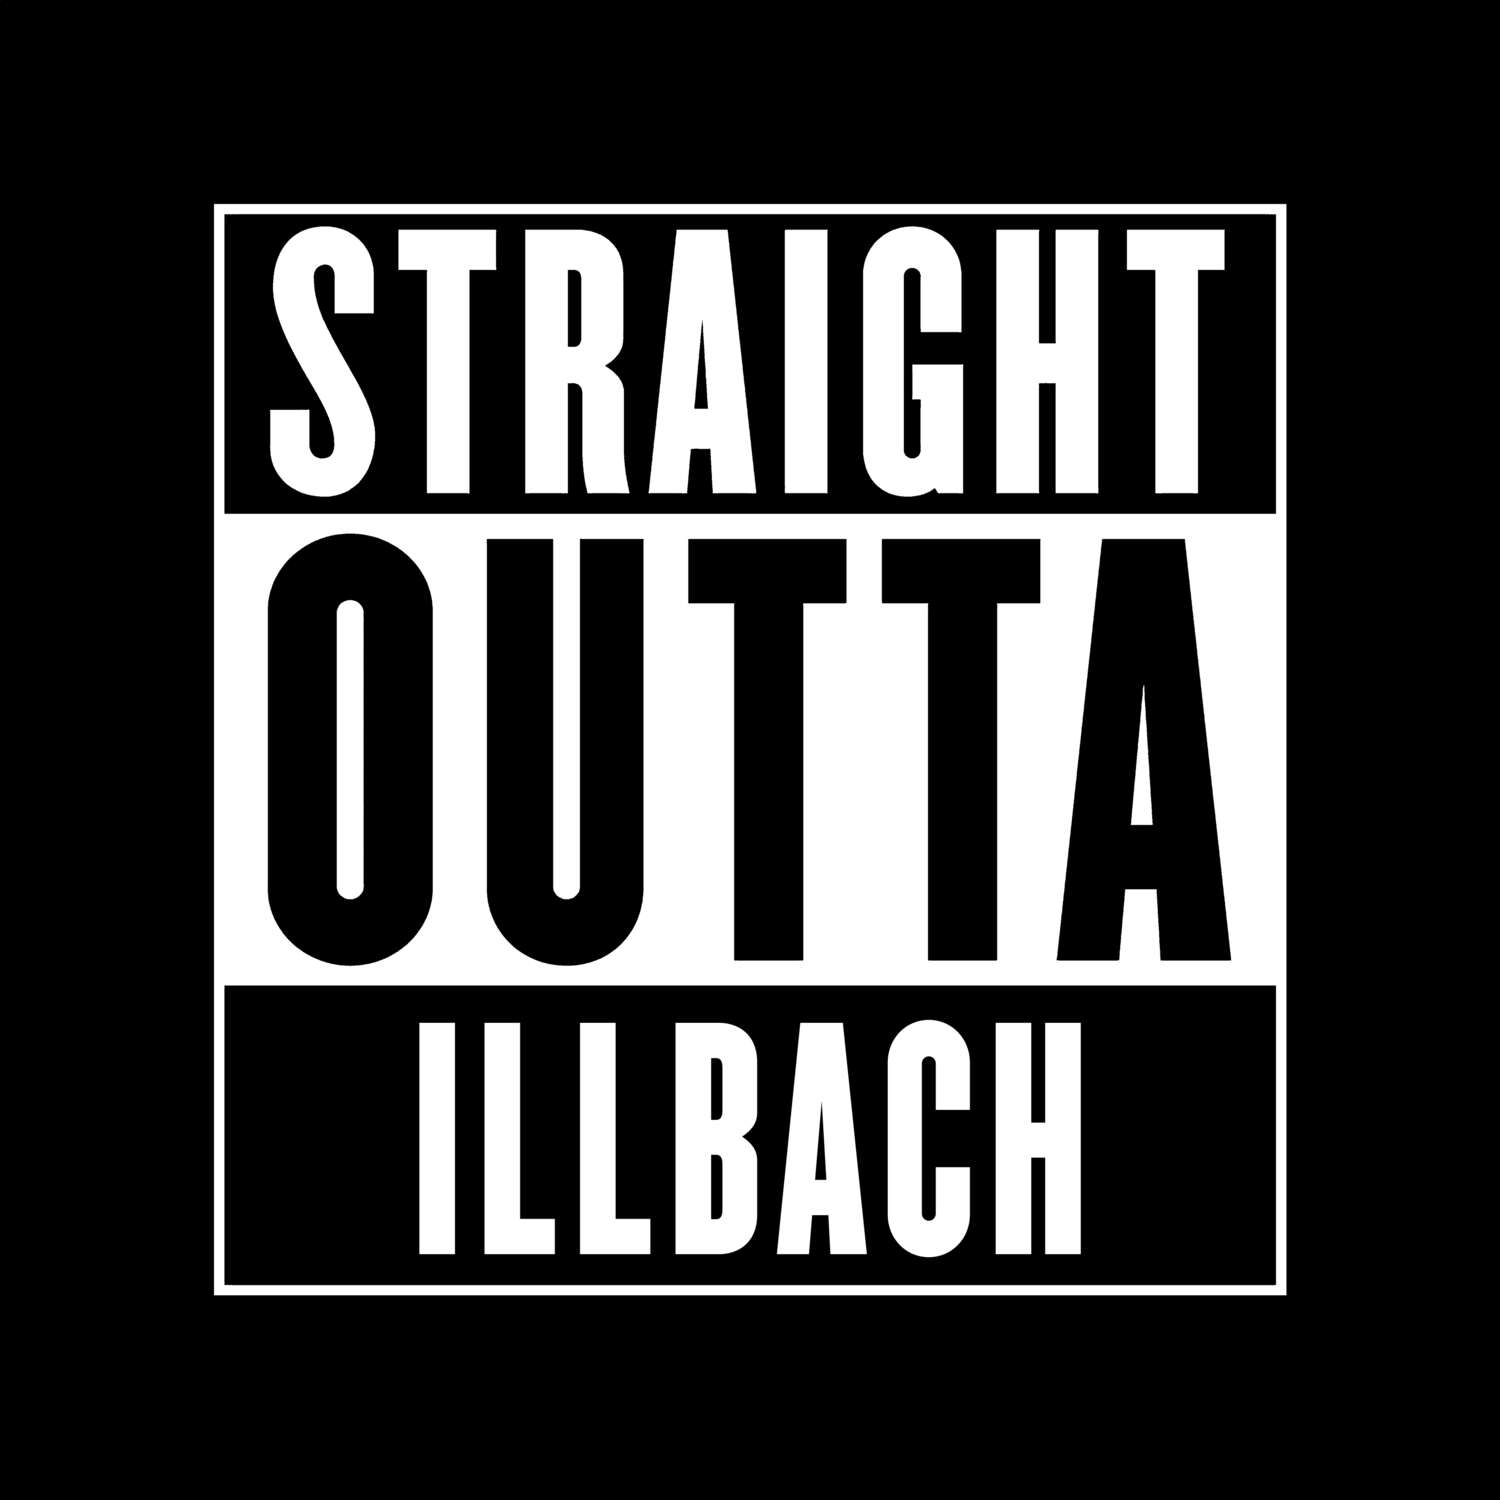 Illbach T-Shirt »Straight Outta«